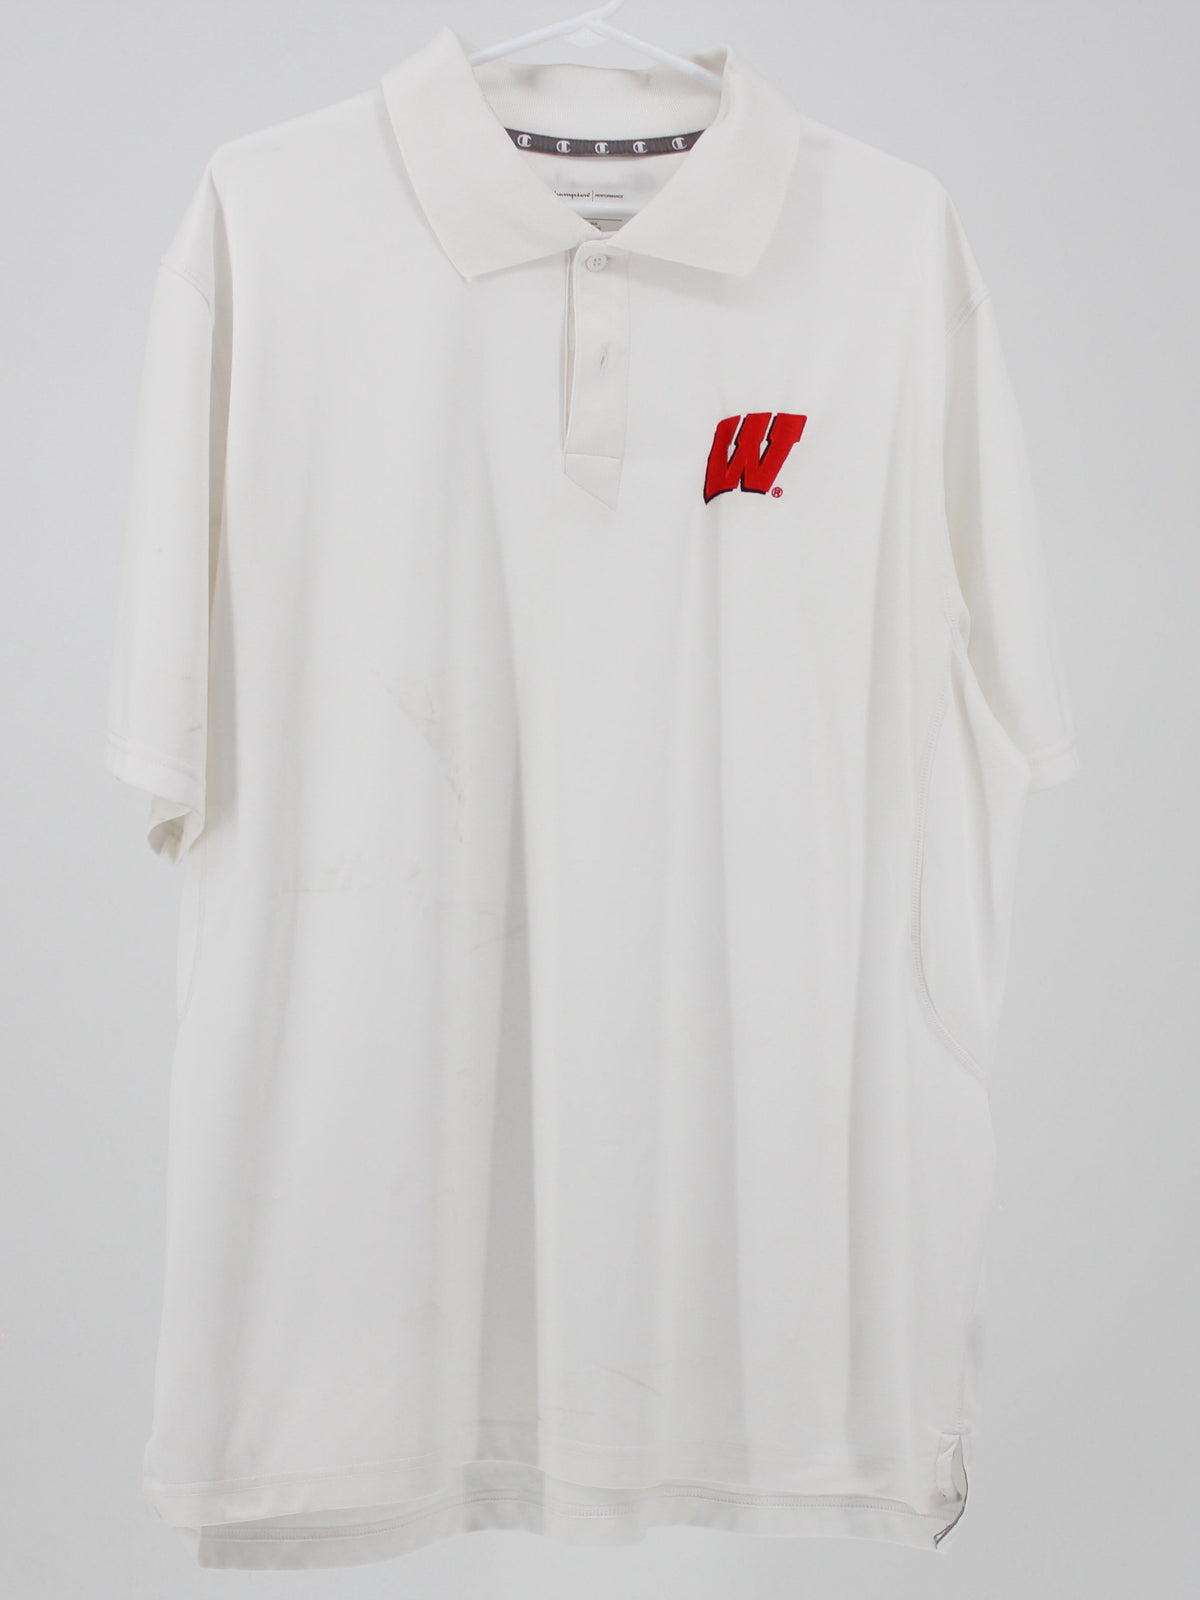 Champion Wisconsin Logo Dry Fit Golf Shirt